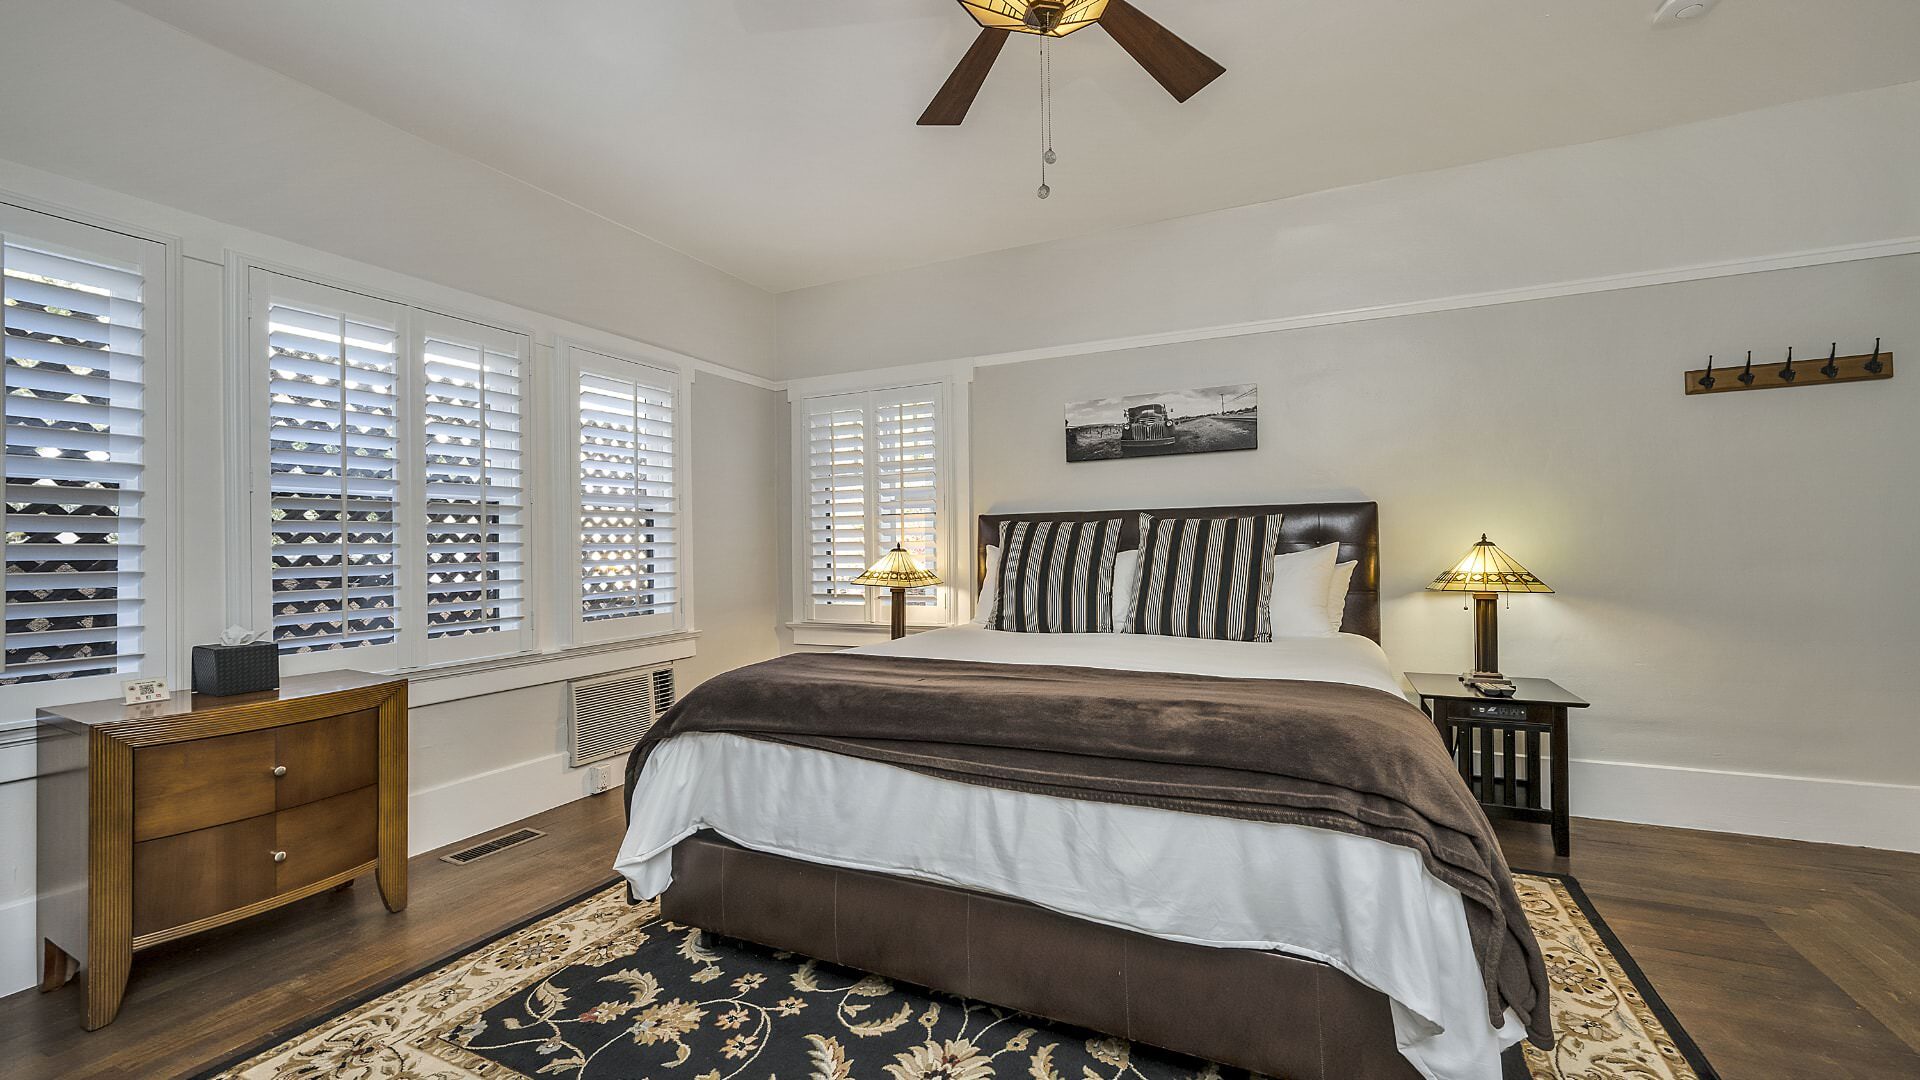 Bedroom with white walls, hardwood flooring, white bedding, and dark wooden nightstands